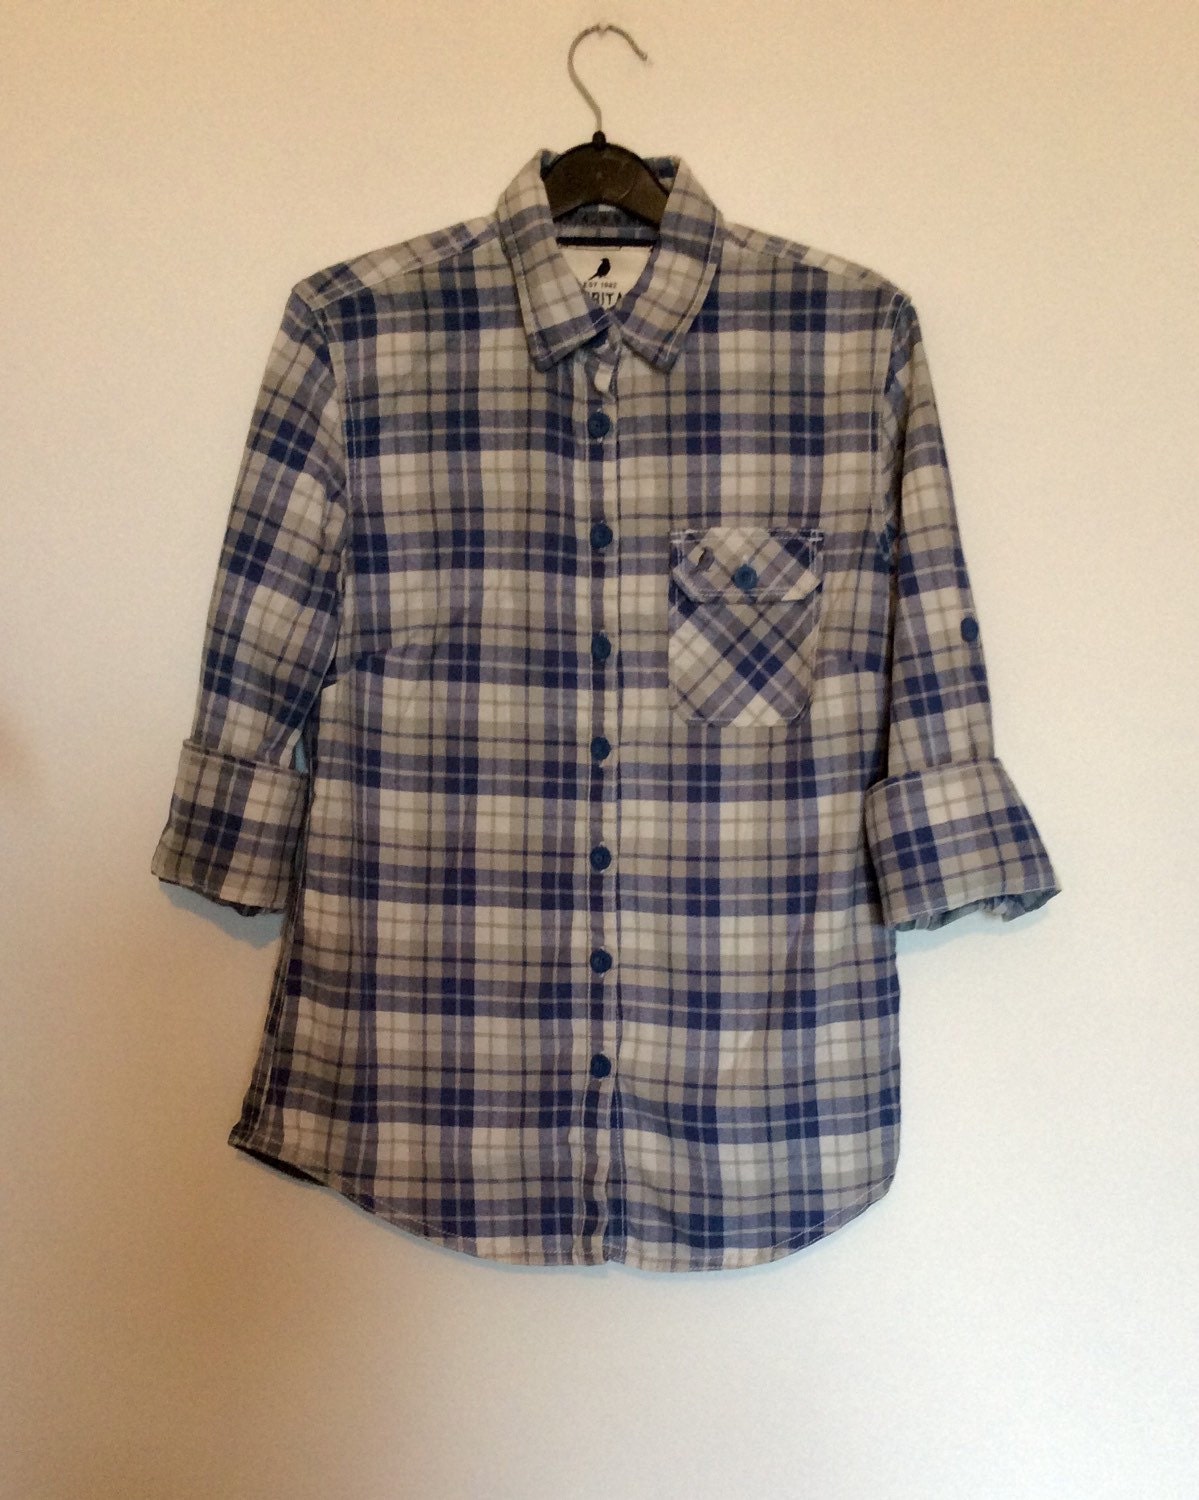 Blue cotton checked lumberjack style shirt by HARLEYHANDBAGS